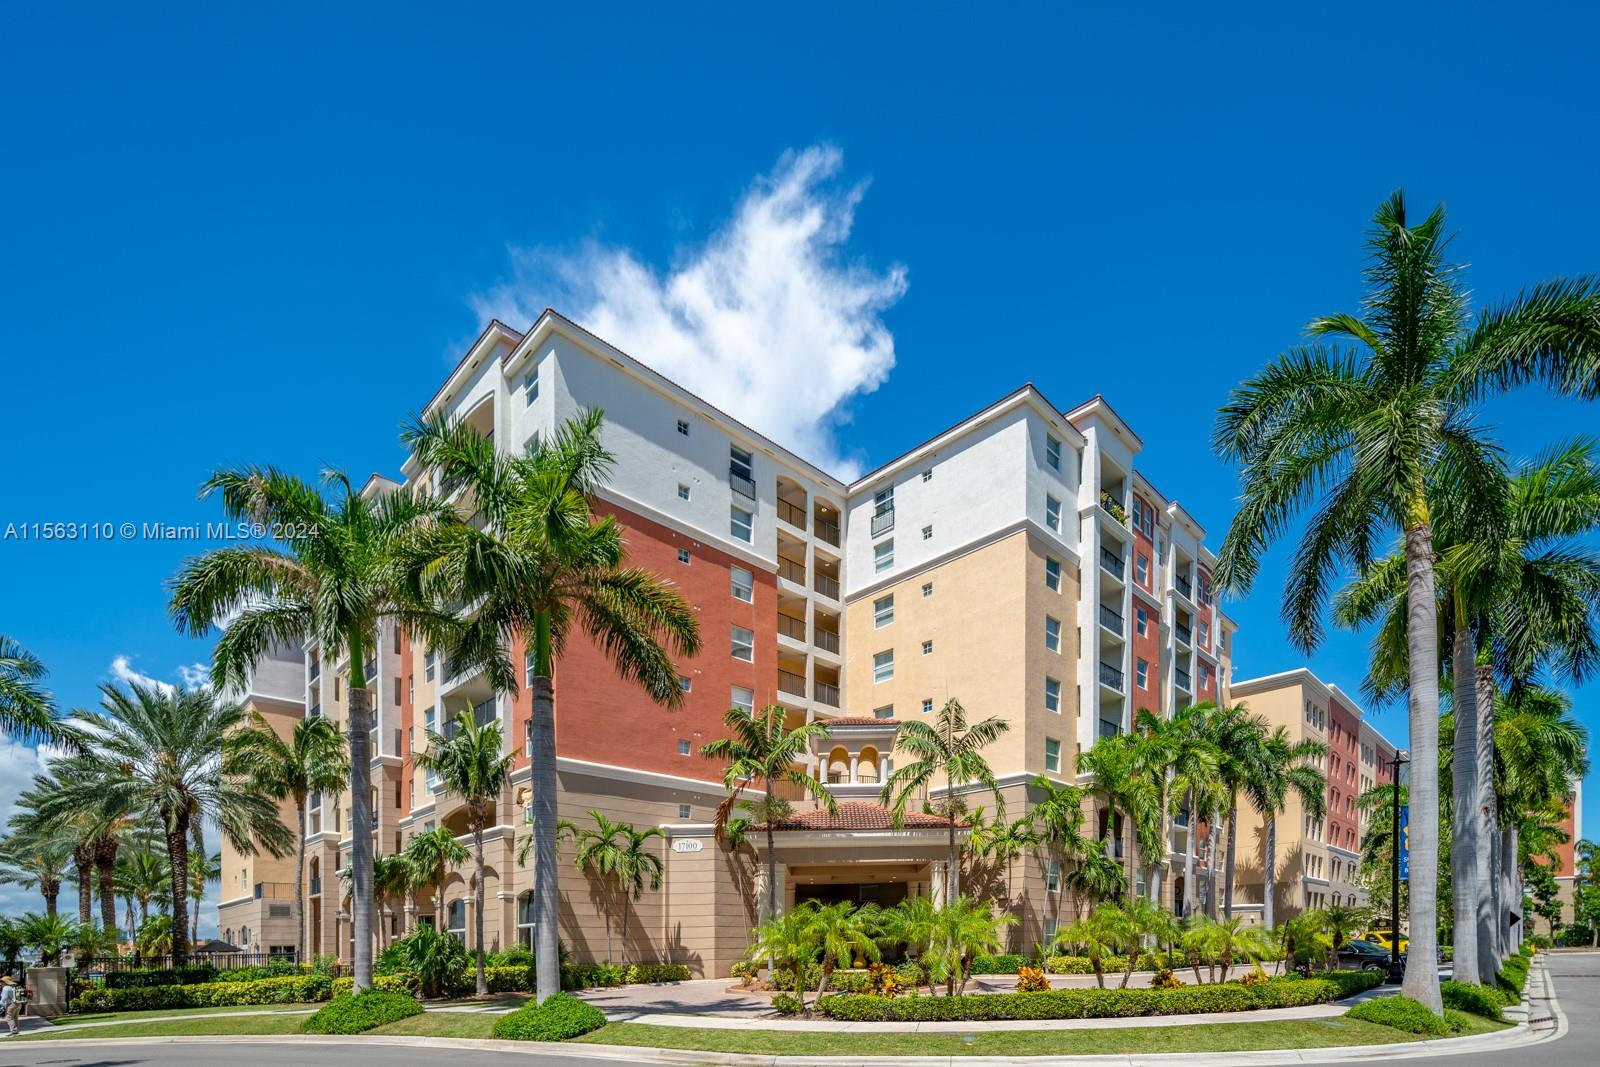 Rental Property at 17100 N Bay Rd 1601, Sunny Isles Beach, Miami-Dade County, Florida - Bedrooms: 3 
Bathrooms: 2  - $3,600 MO.